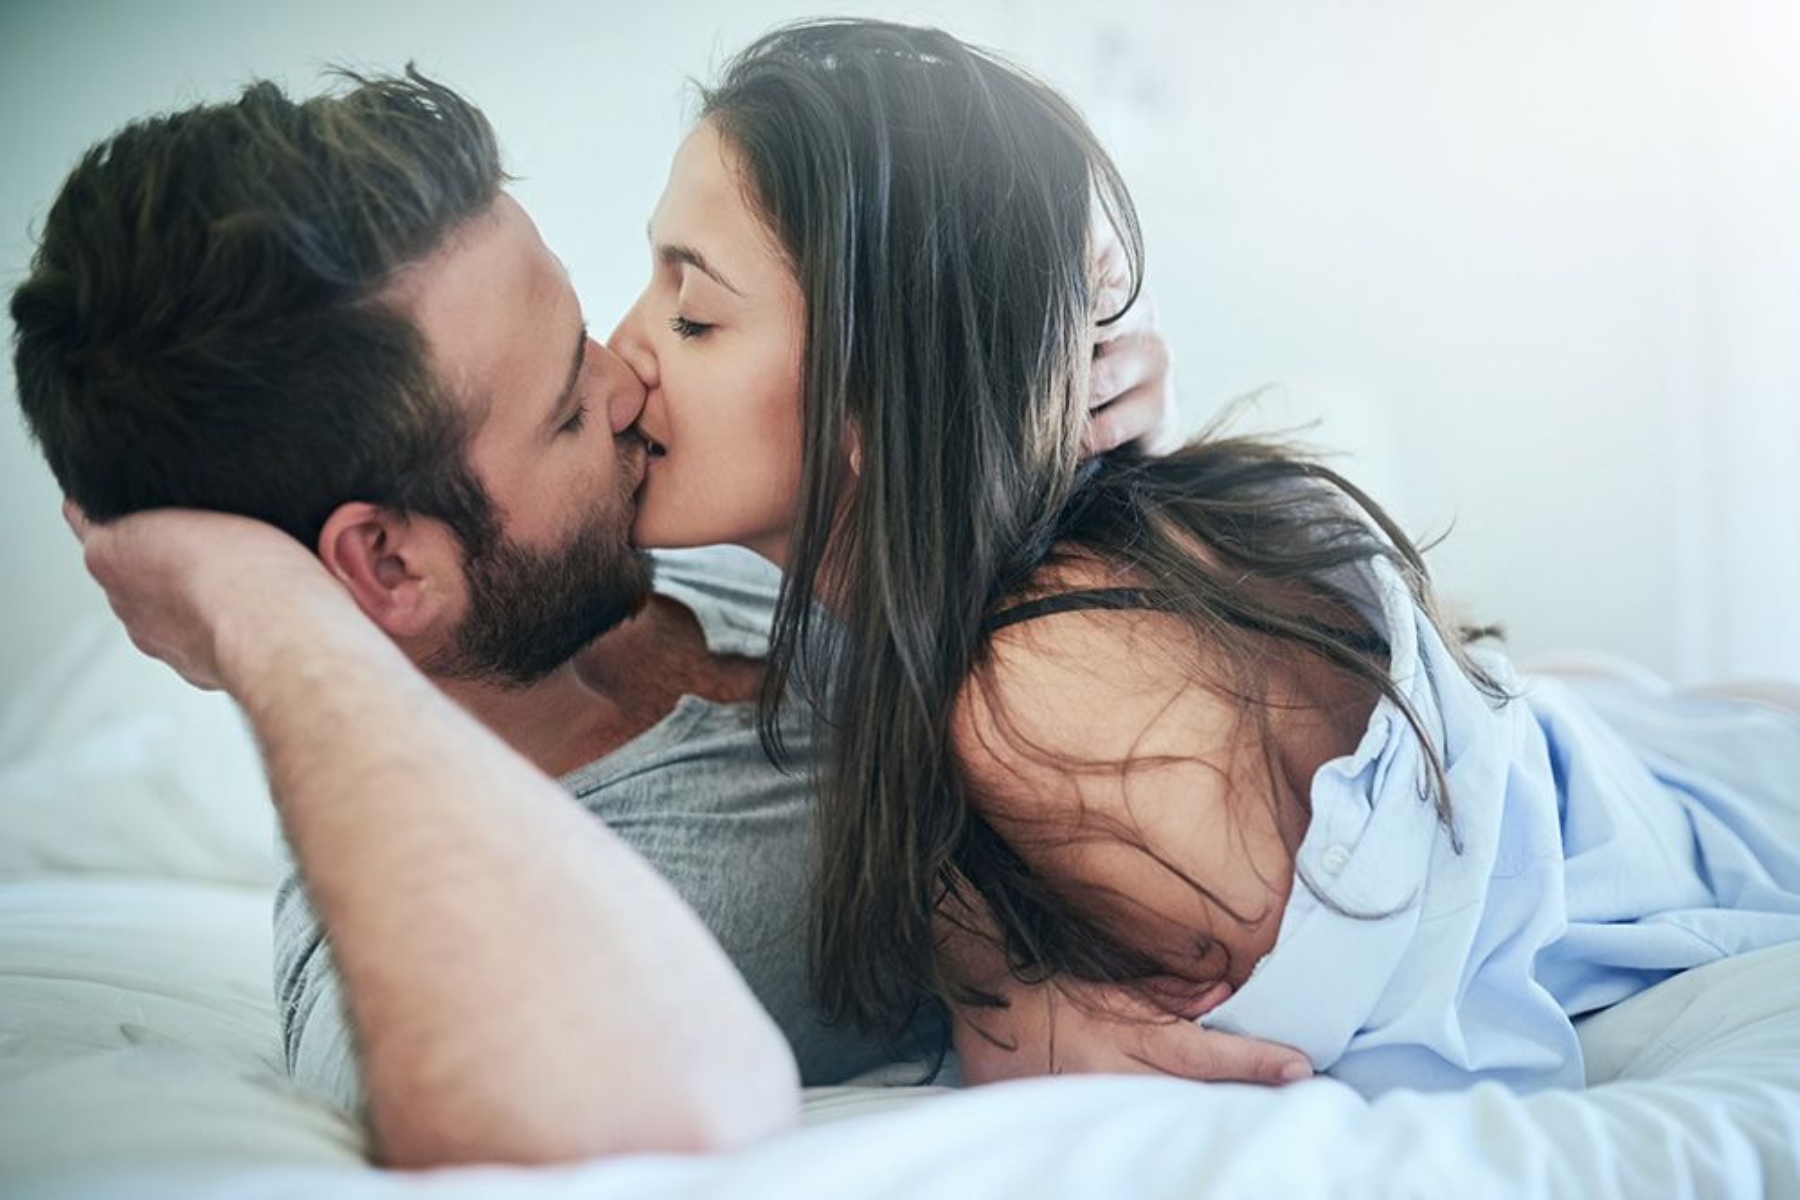 Sex life: Μια καθημερινή συνήθεια μπορεί να βελτιώσει τη σεξουαλική σας ζωή